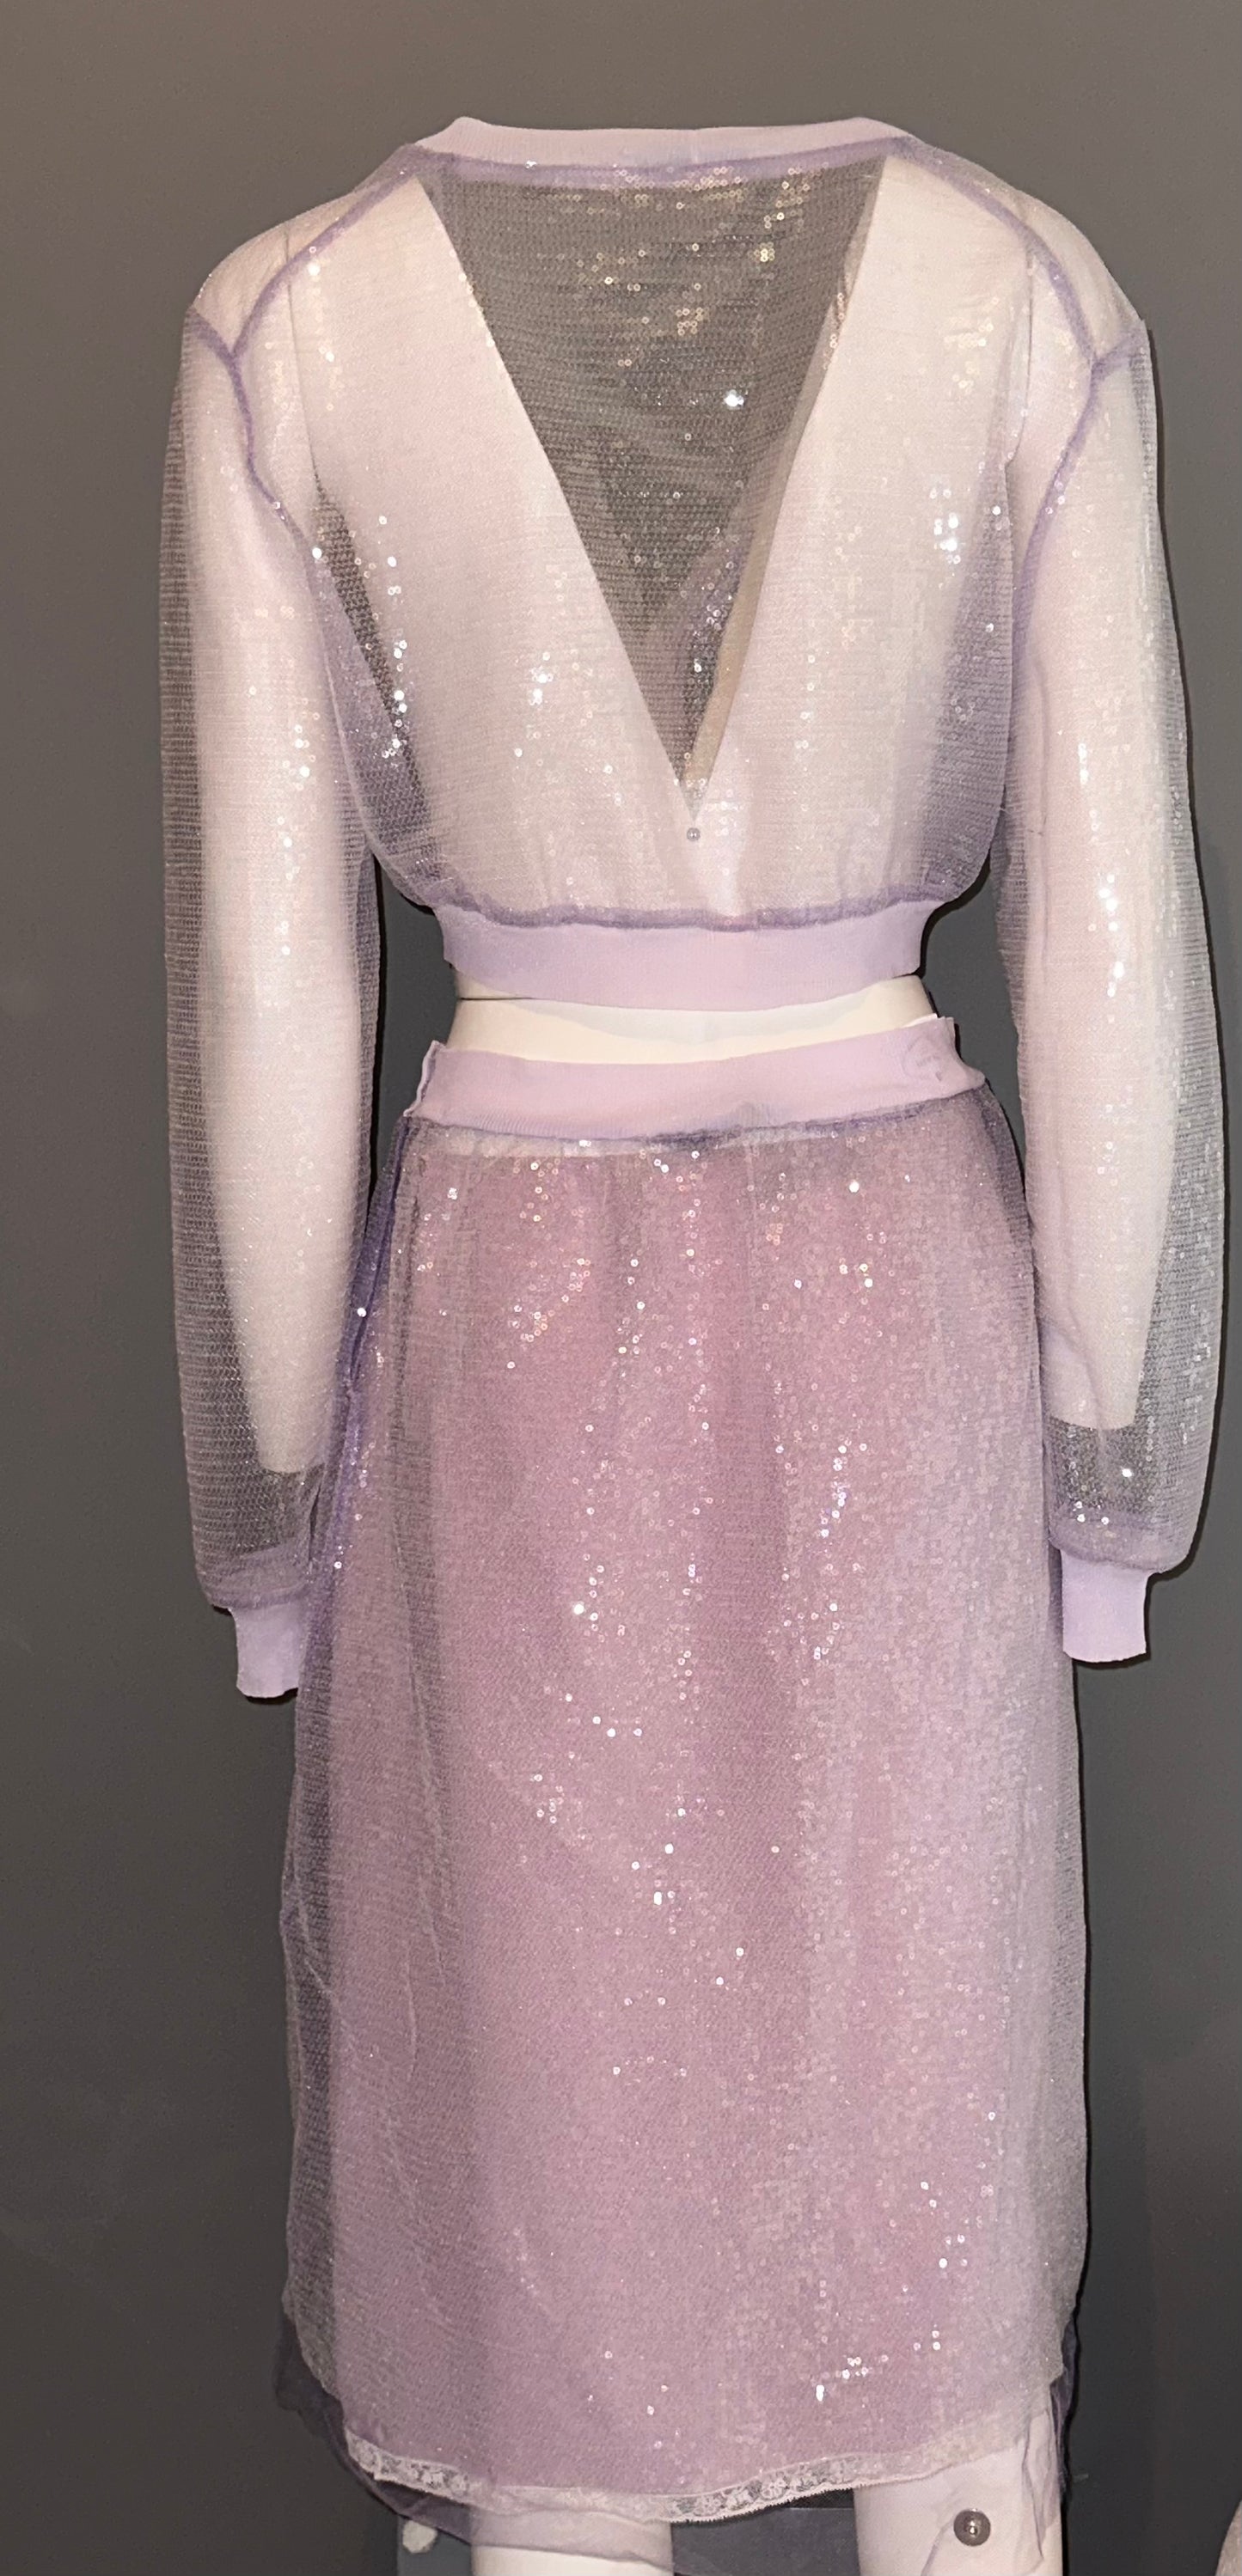 PRADA - Jacket & Skirt paiettes violet size 42 IT